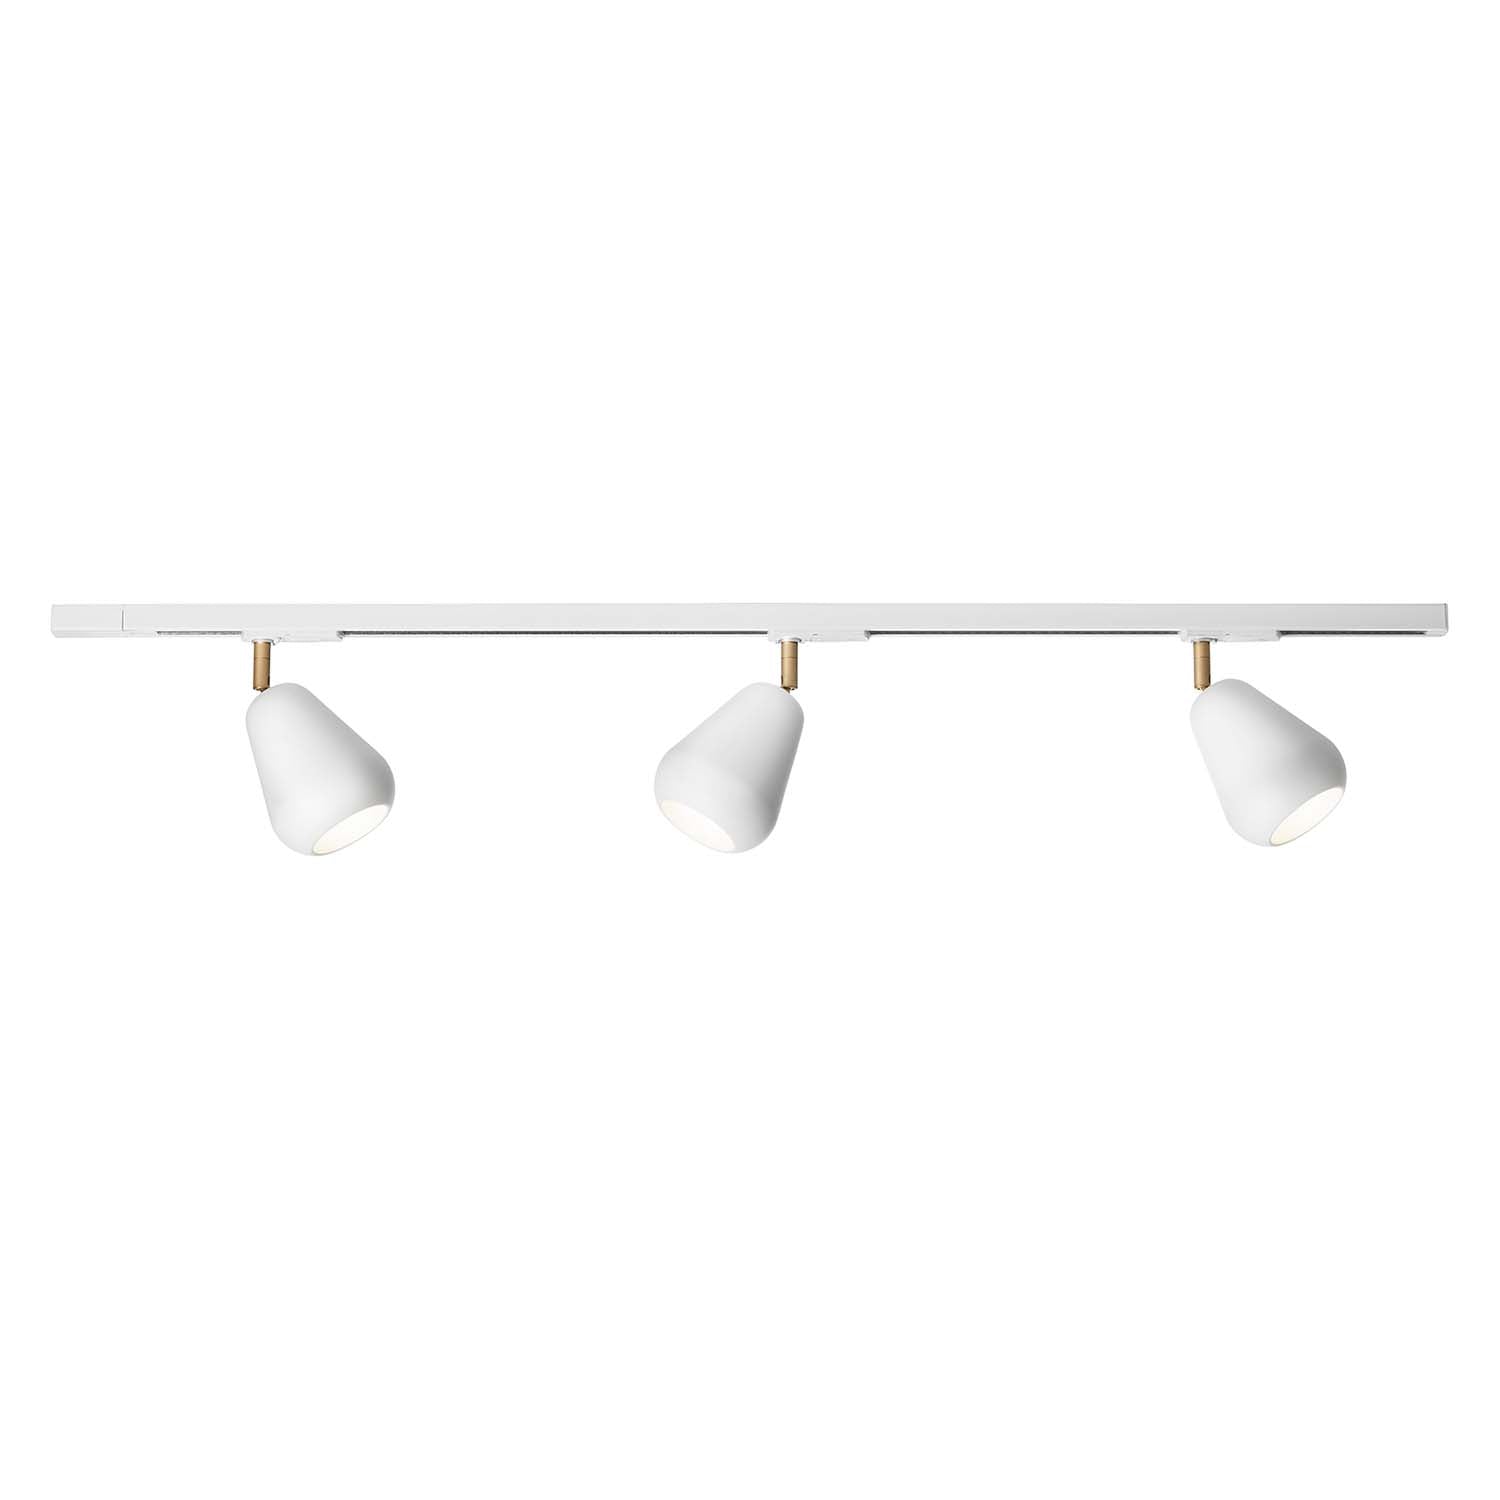 ANOLI SPOT - Minimalist and designer adjustable wall spotlight rail